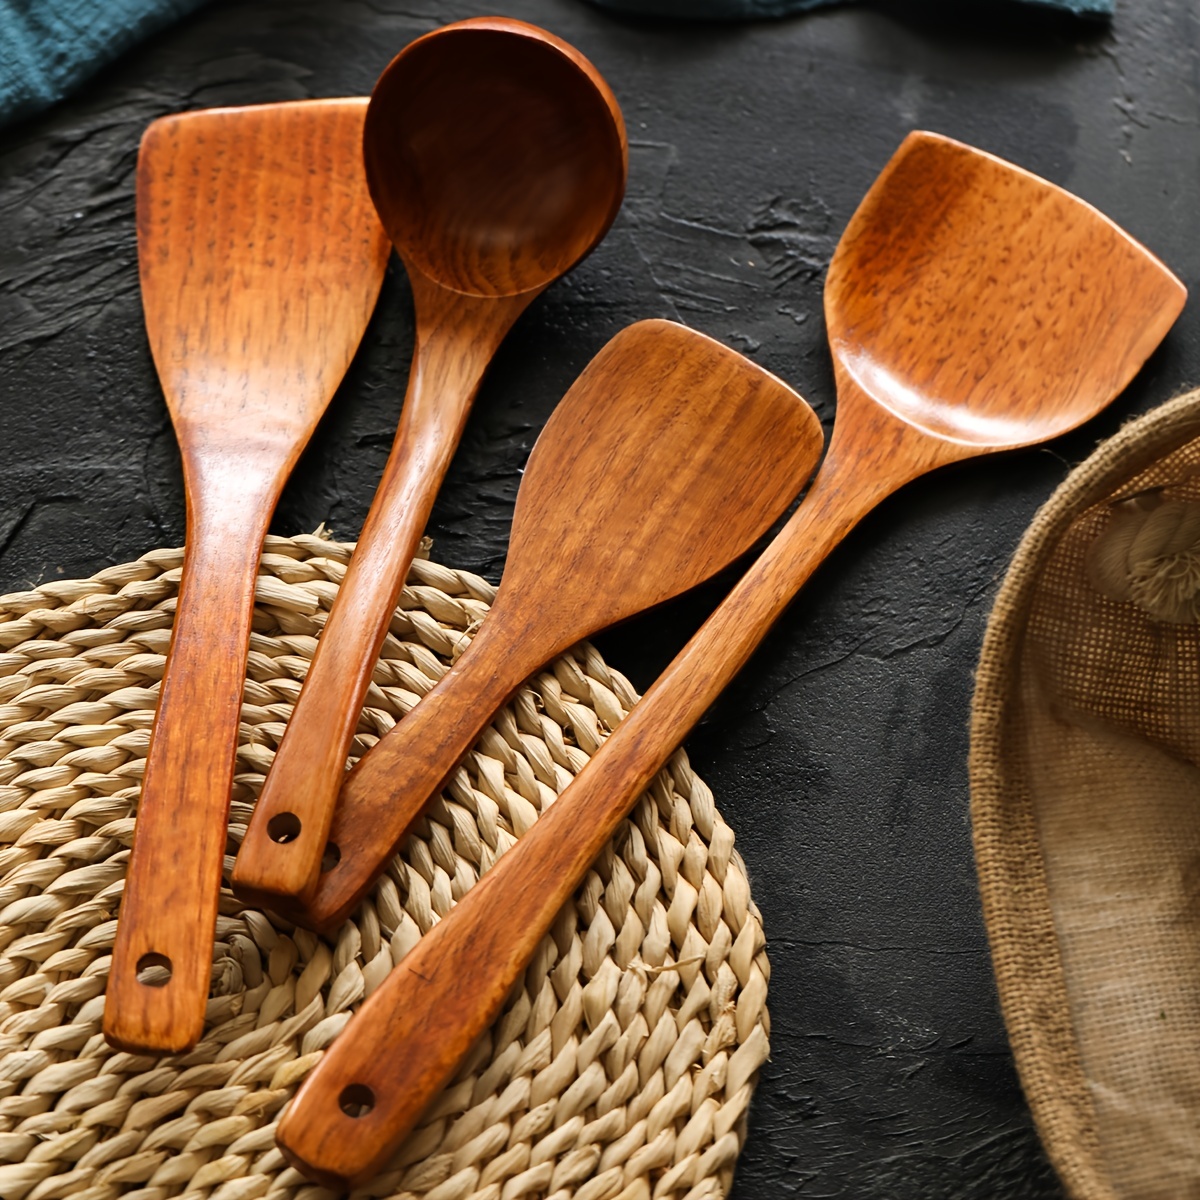  Utensilios de madera para cocinar, paquete de 6 cucharas de  madera de teca natural para cocinar juego de utensilios de madera y  espátula para cocina